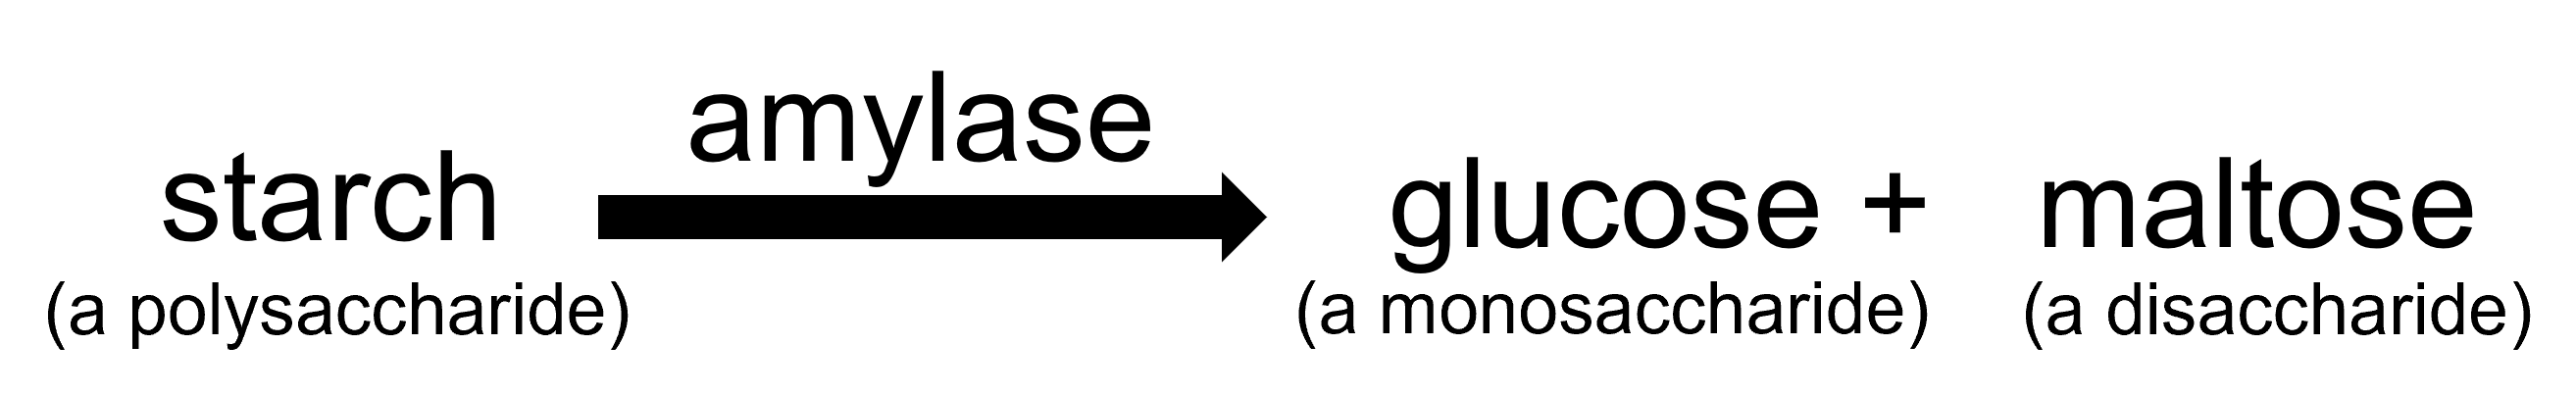 reaction catalyzed by amylase